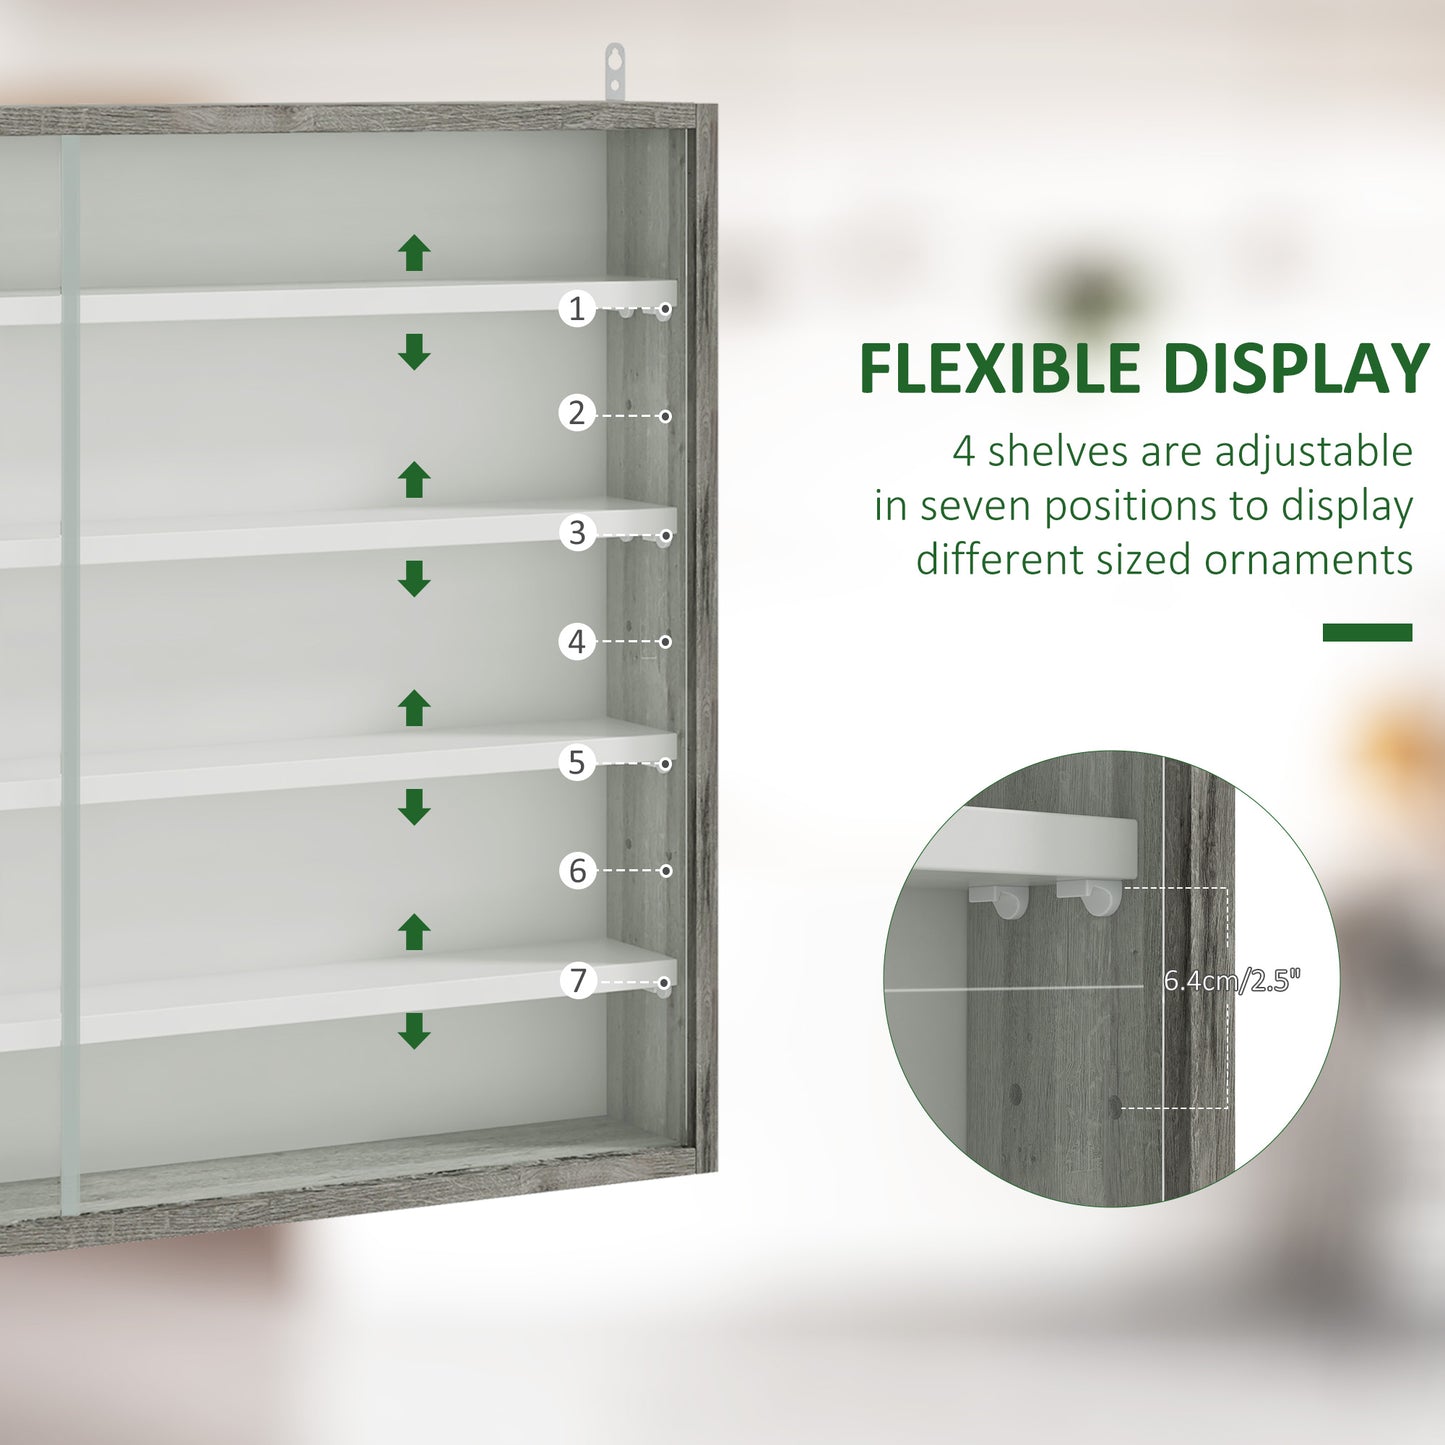 HOMCOM 5-Tier Wall Display Shelf Unit Cabinet w/ 4 Adjustable Shelves Glass Doors Home Office Ornaments 60x80cm Grey Wood Grain